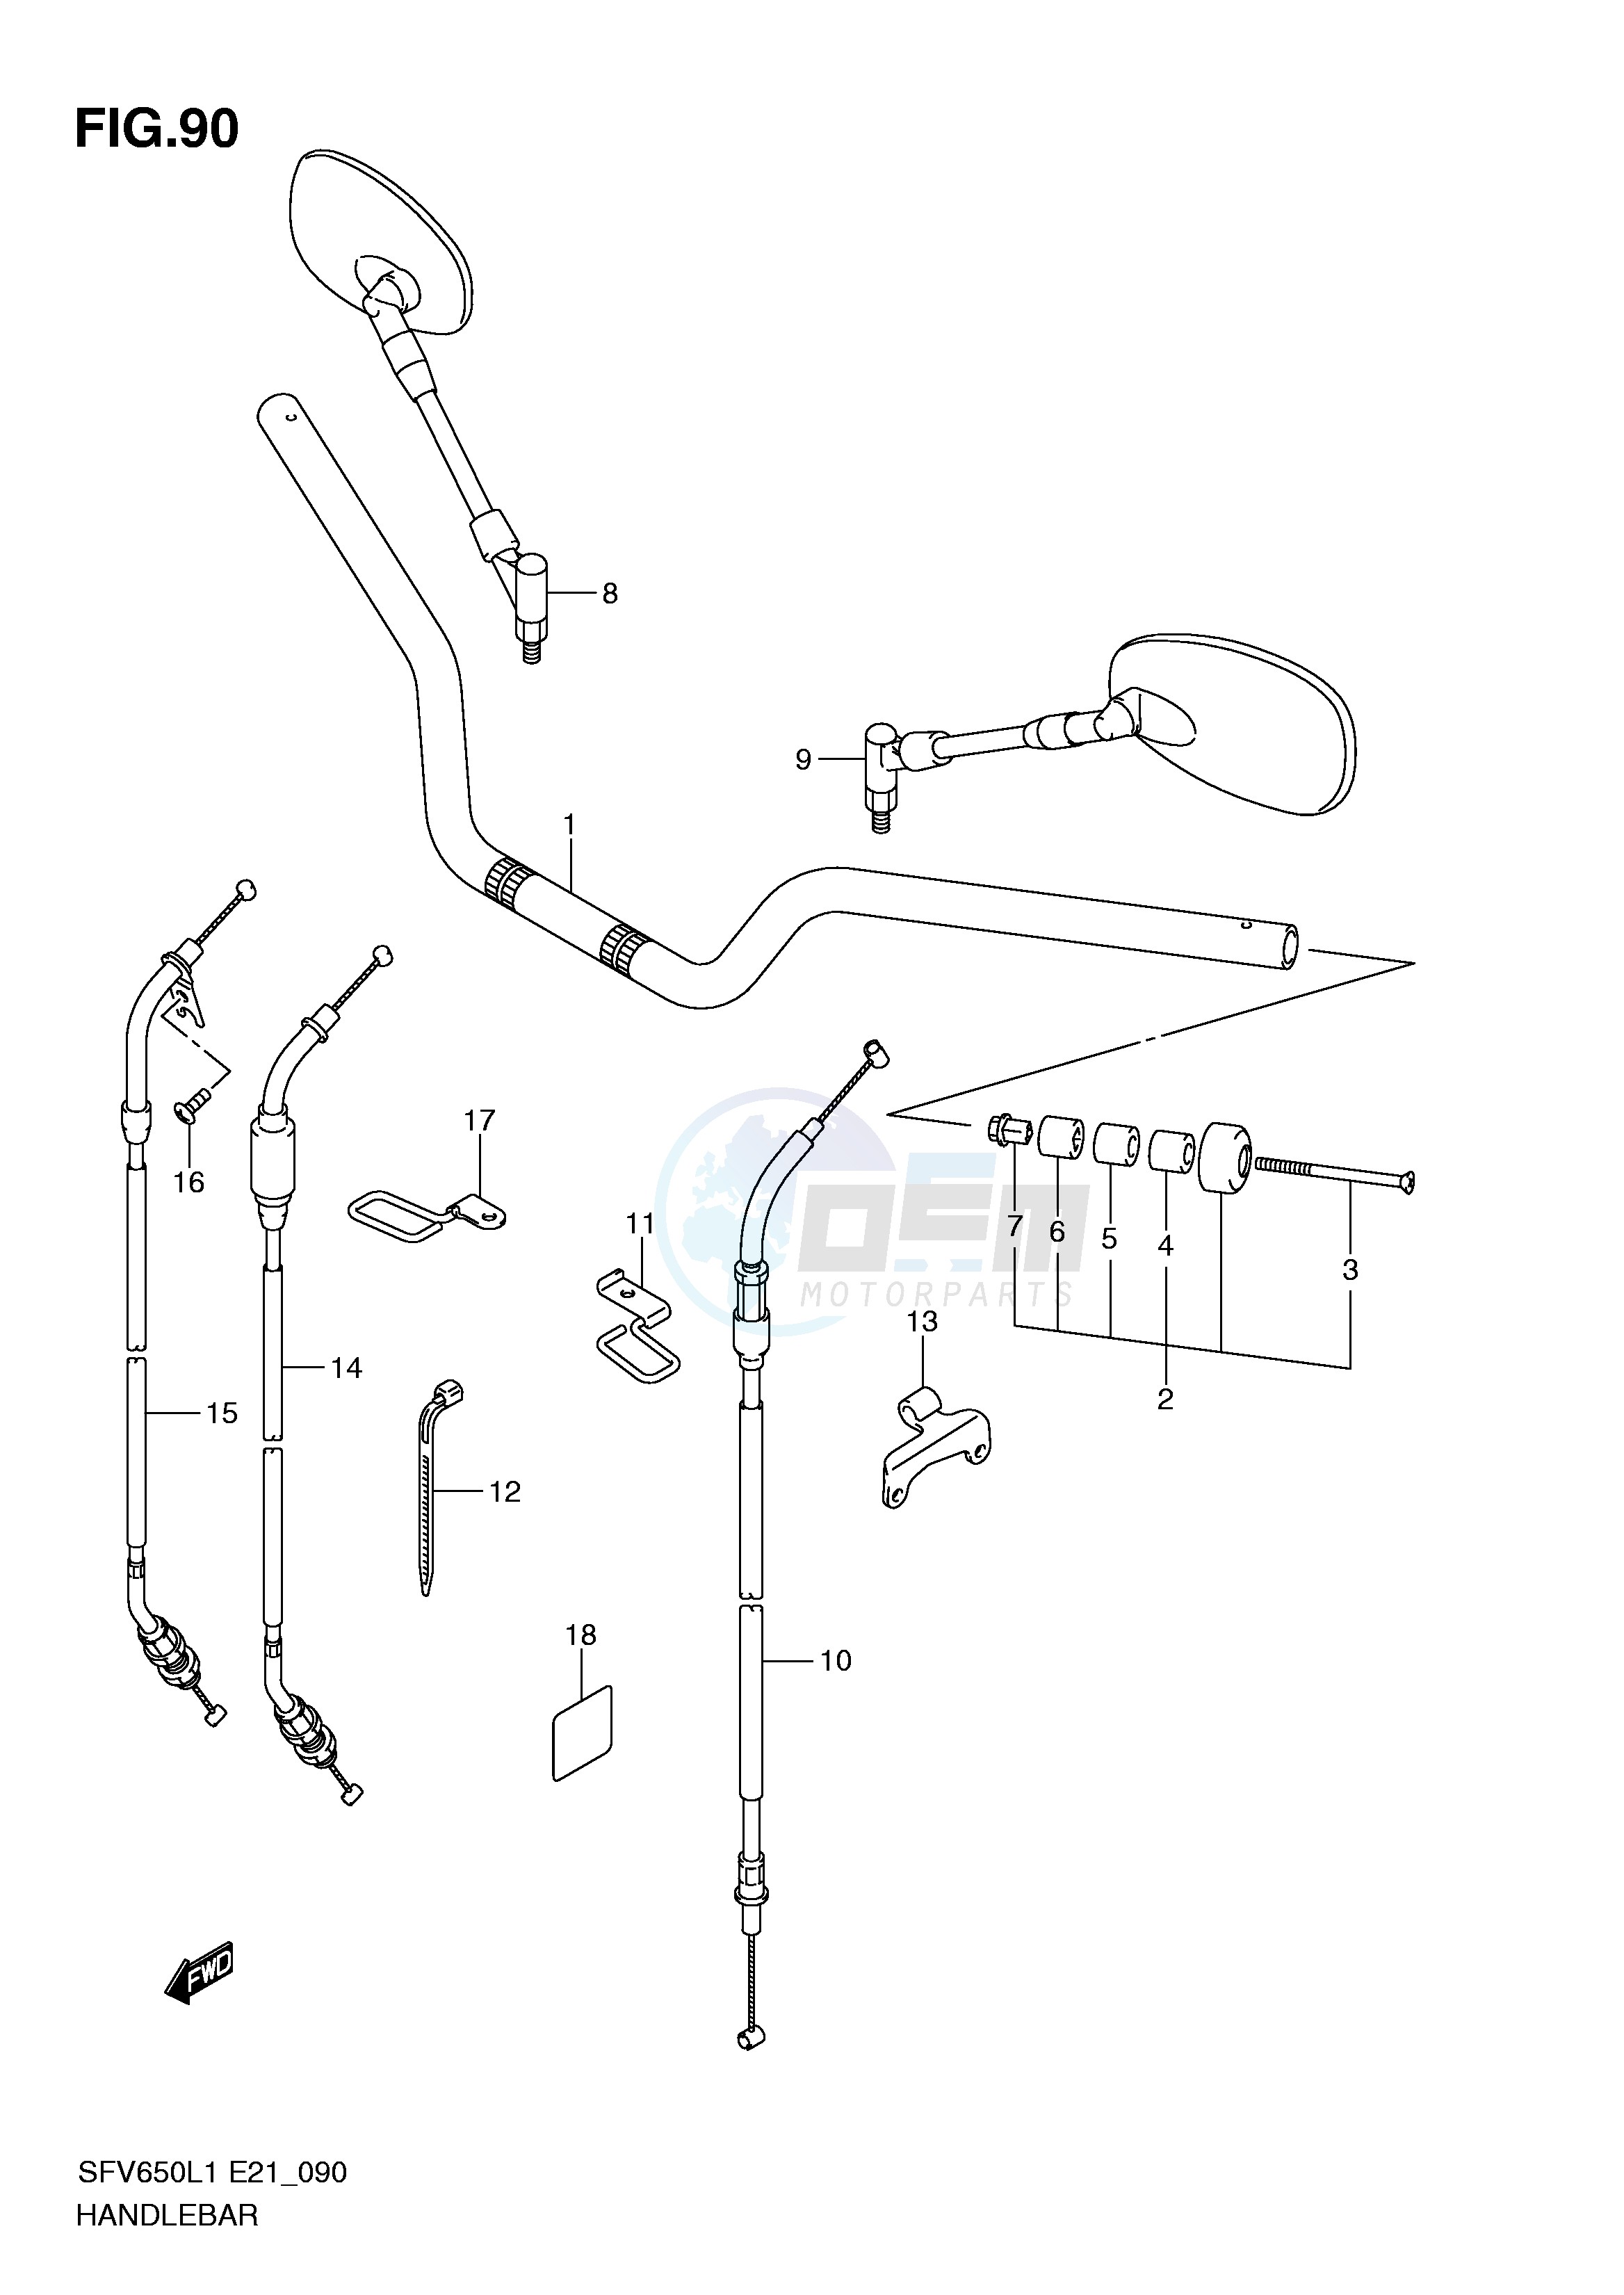 HANDLEBAR (SFV650L1 E24) blueprint